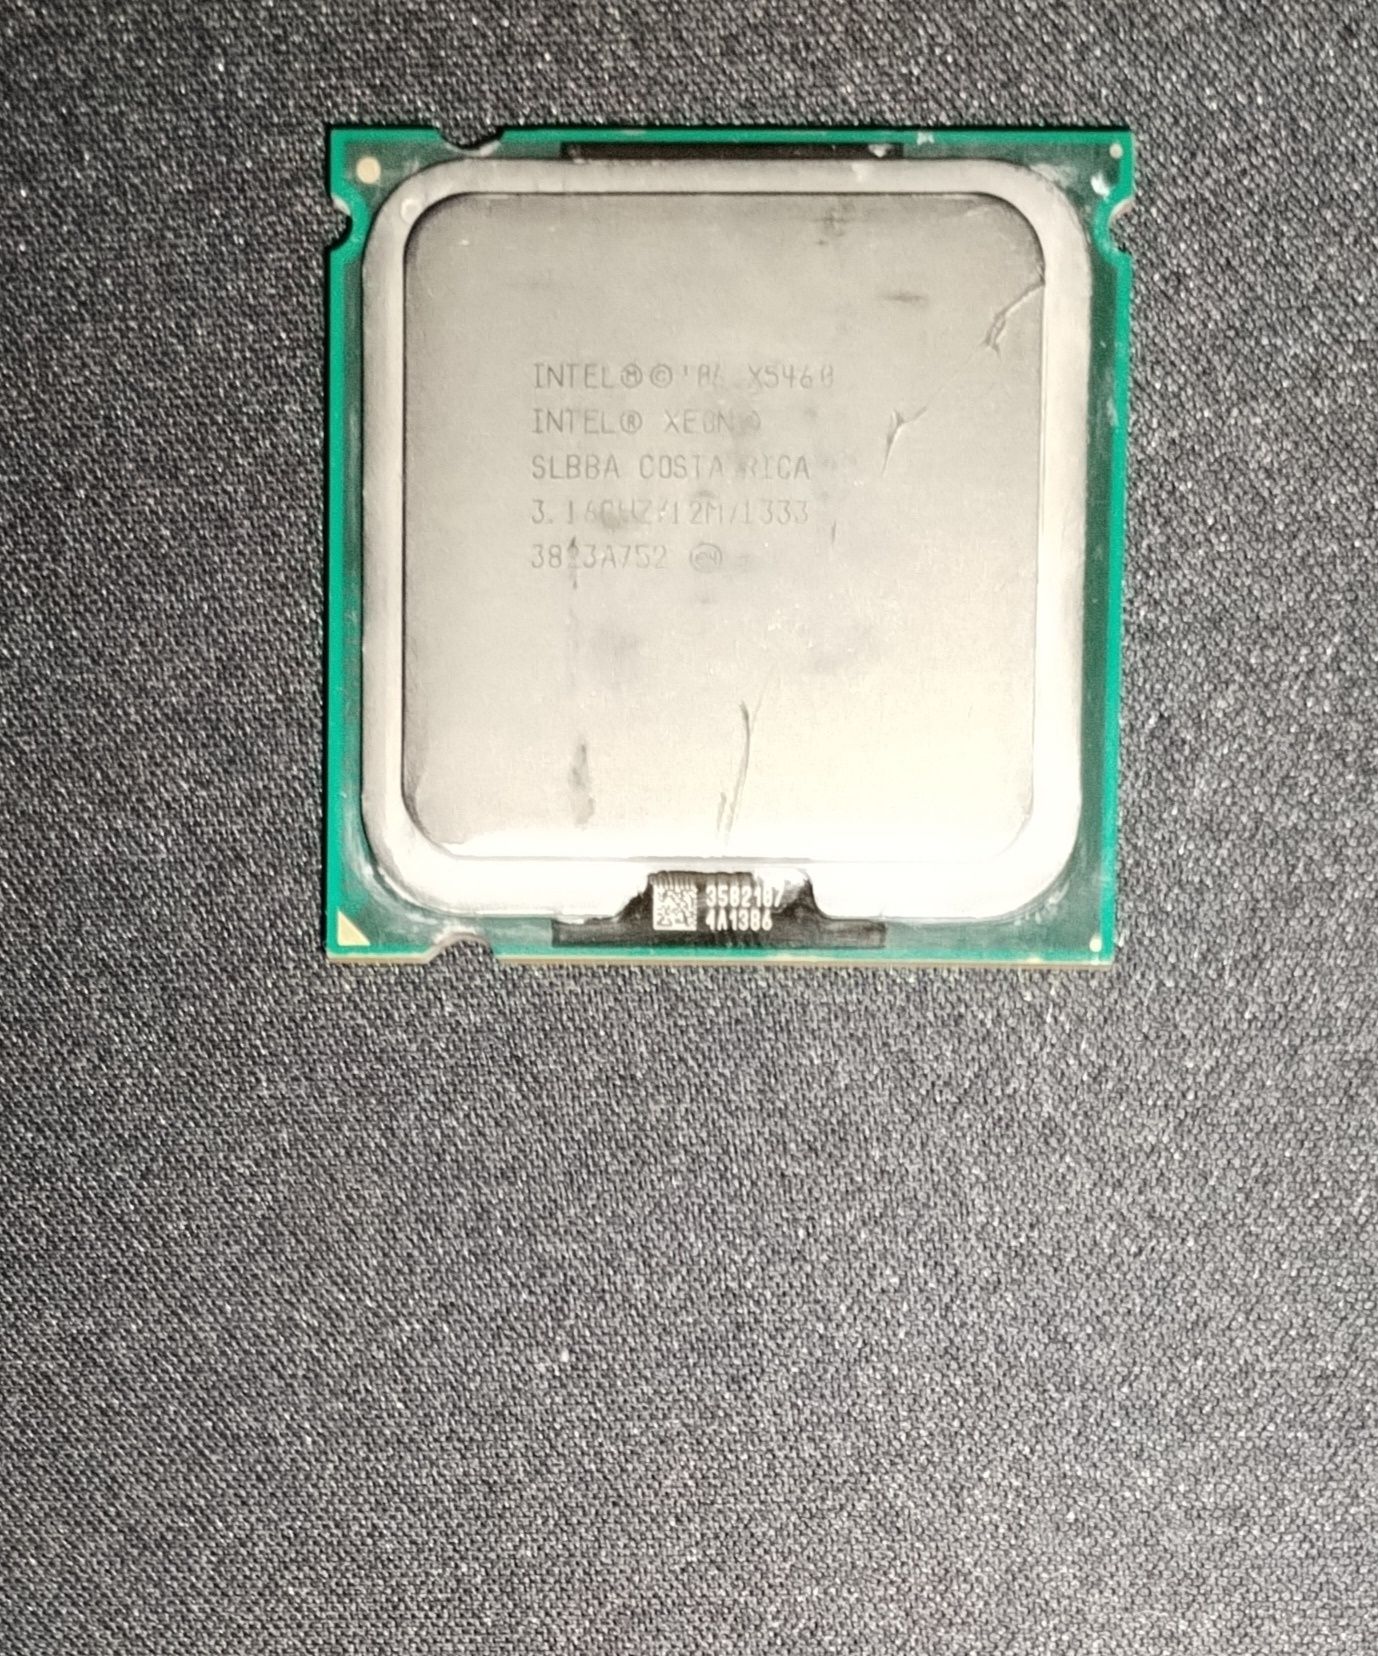 Procesor Intel x5460